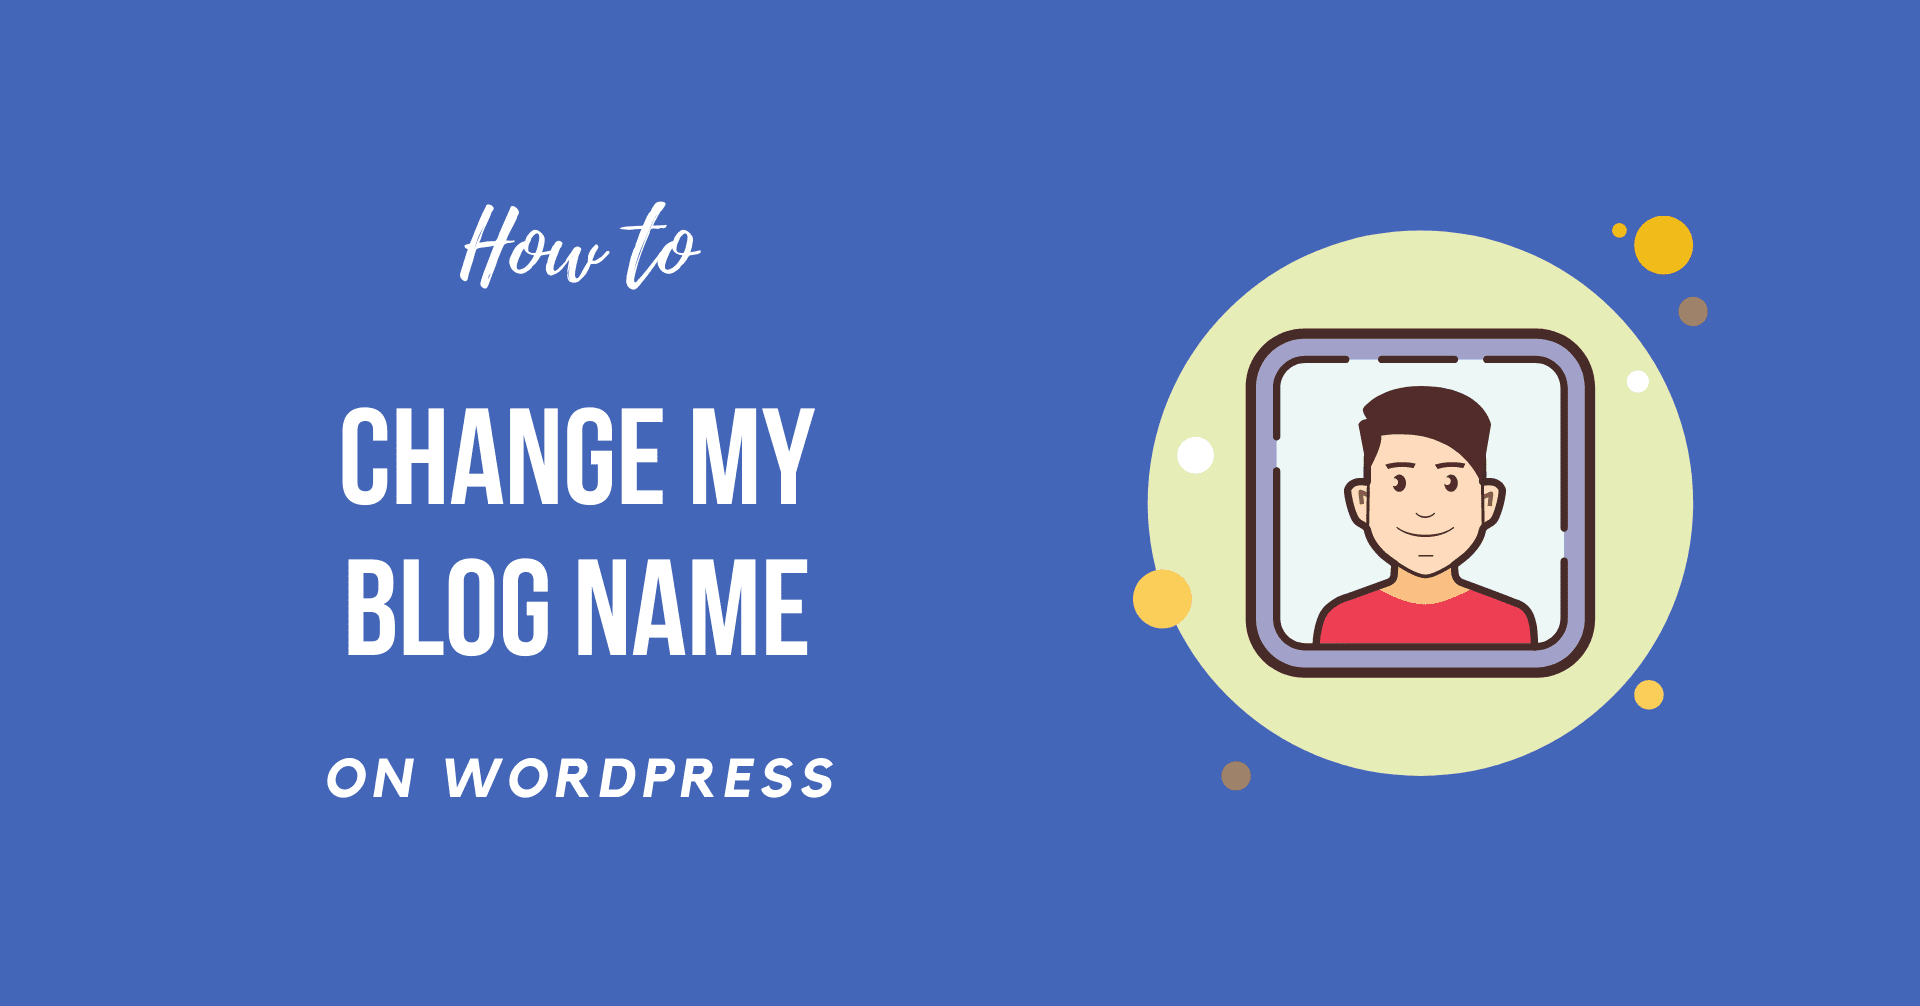 How to Change My Blog Name on WordPress